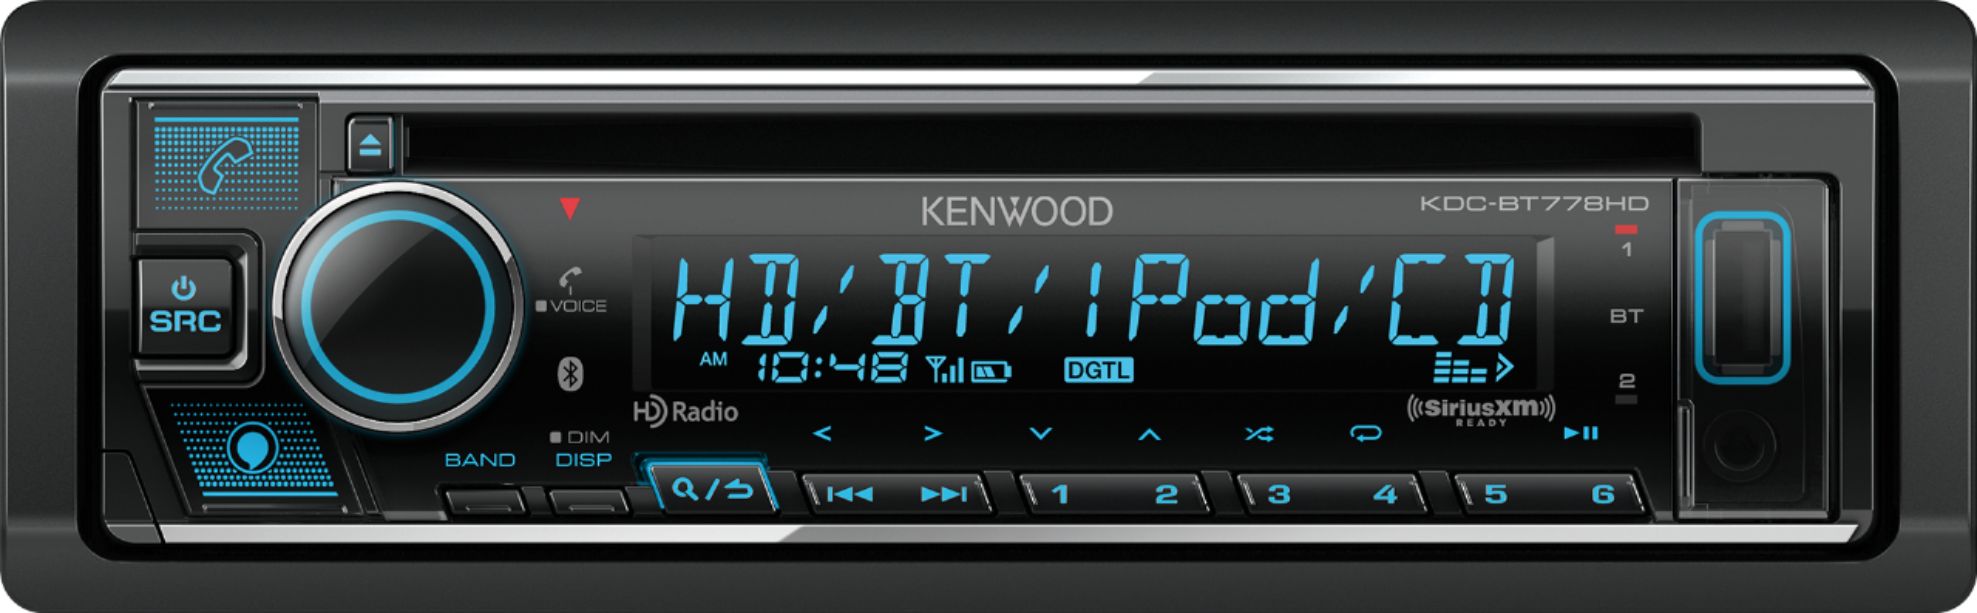 Kenwood Car Radio Stereo Silver Face Surround Trim Kdc-309,311,W4527 Etc 